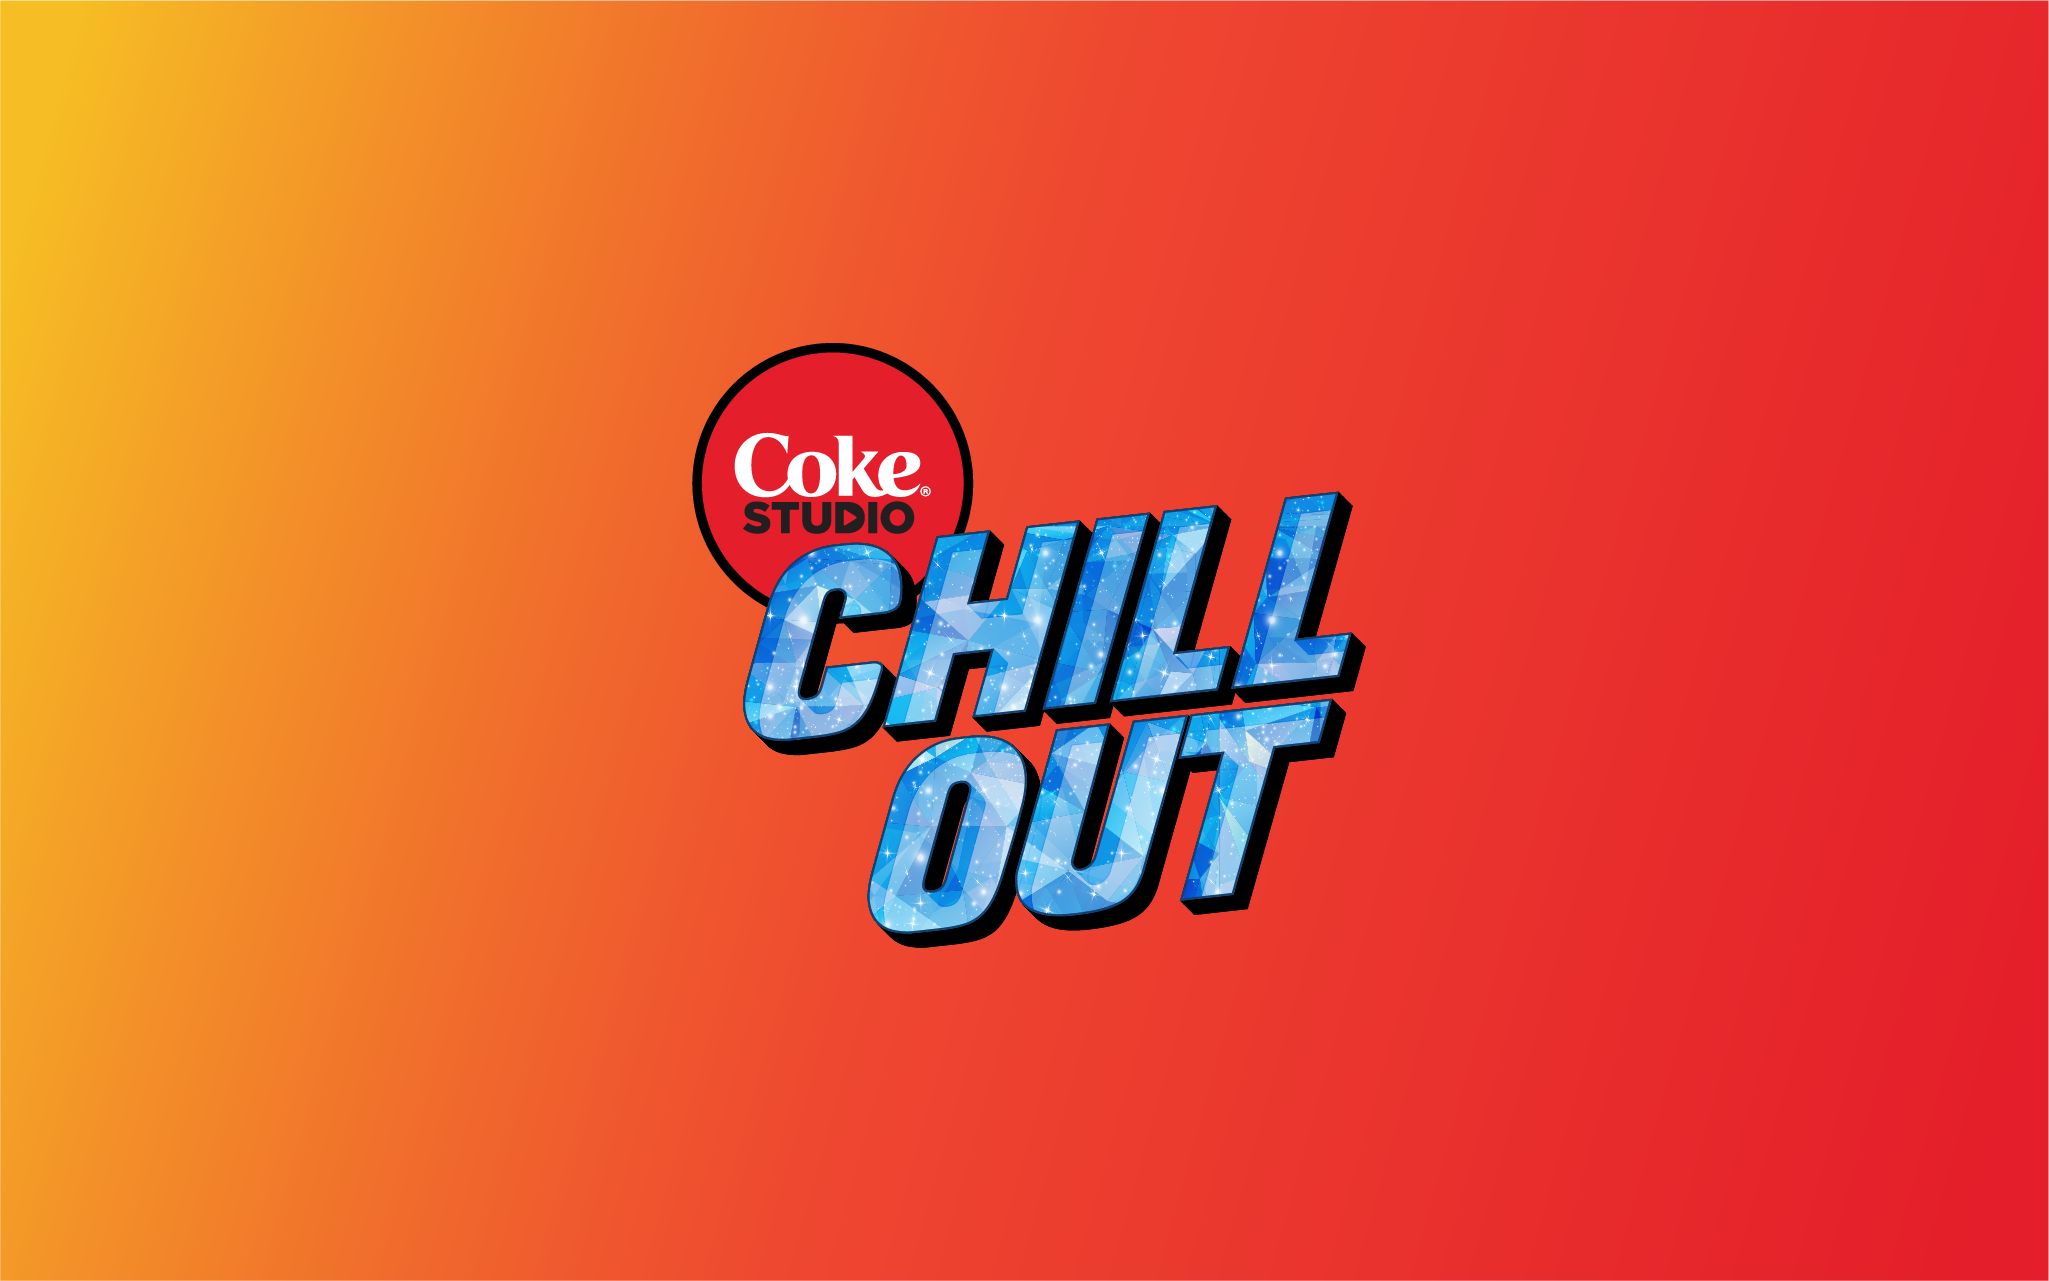 Coke Studio Chill Out logo